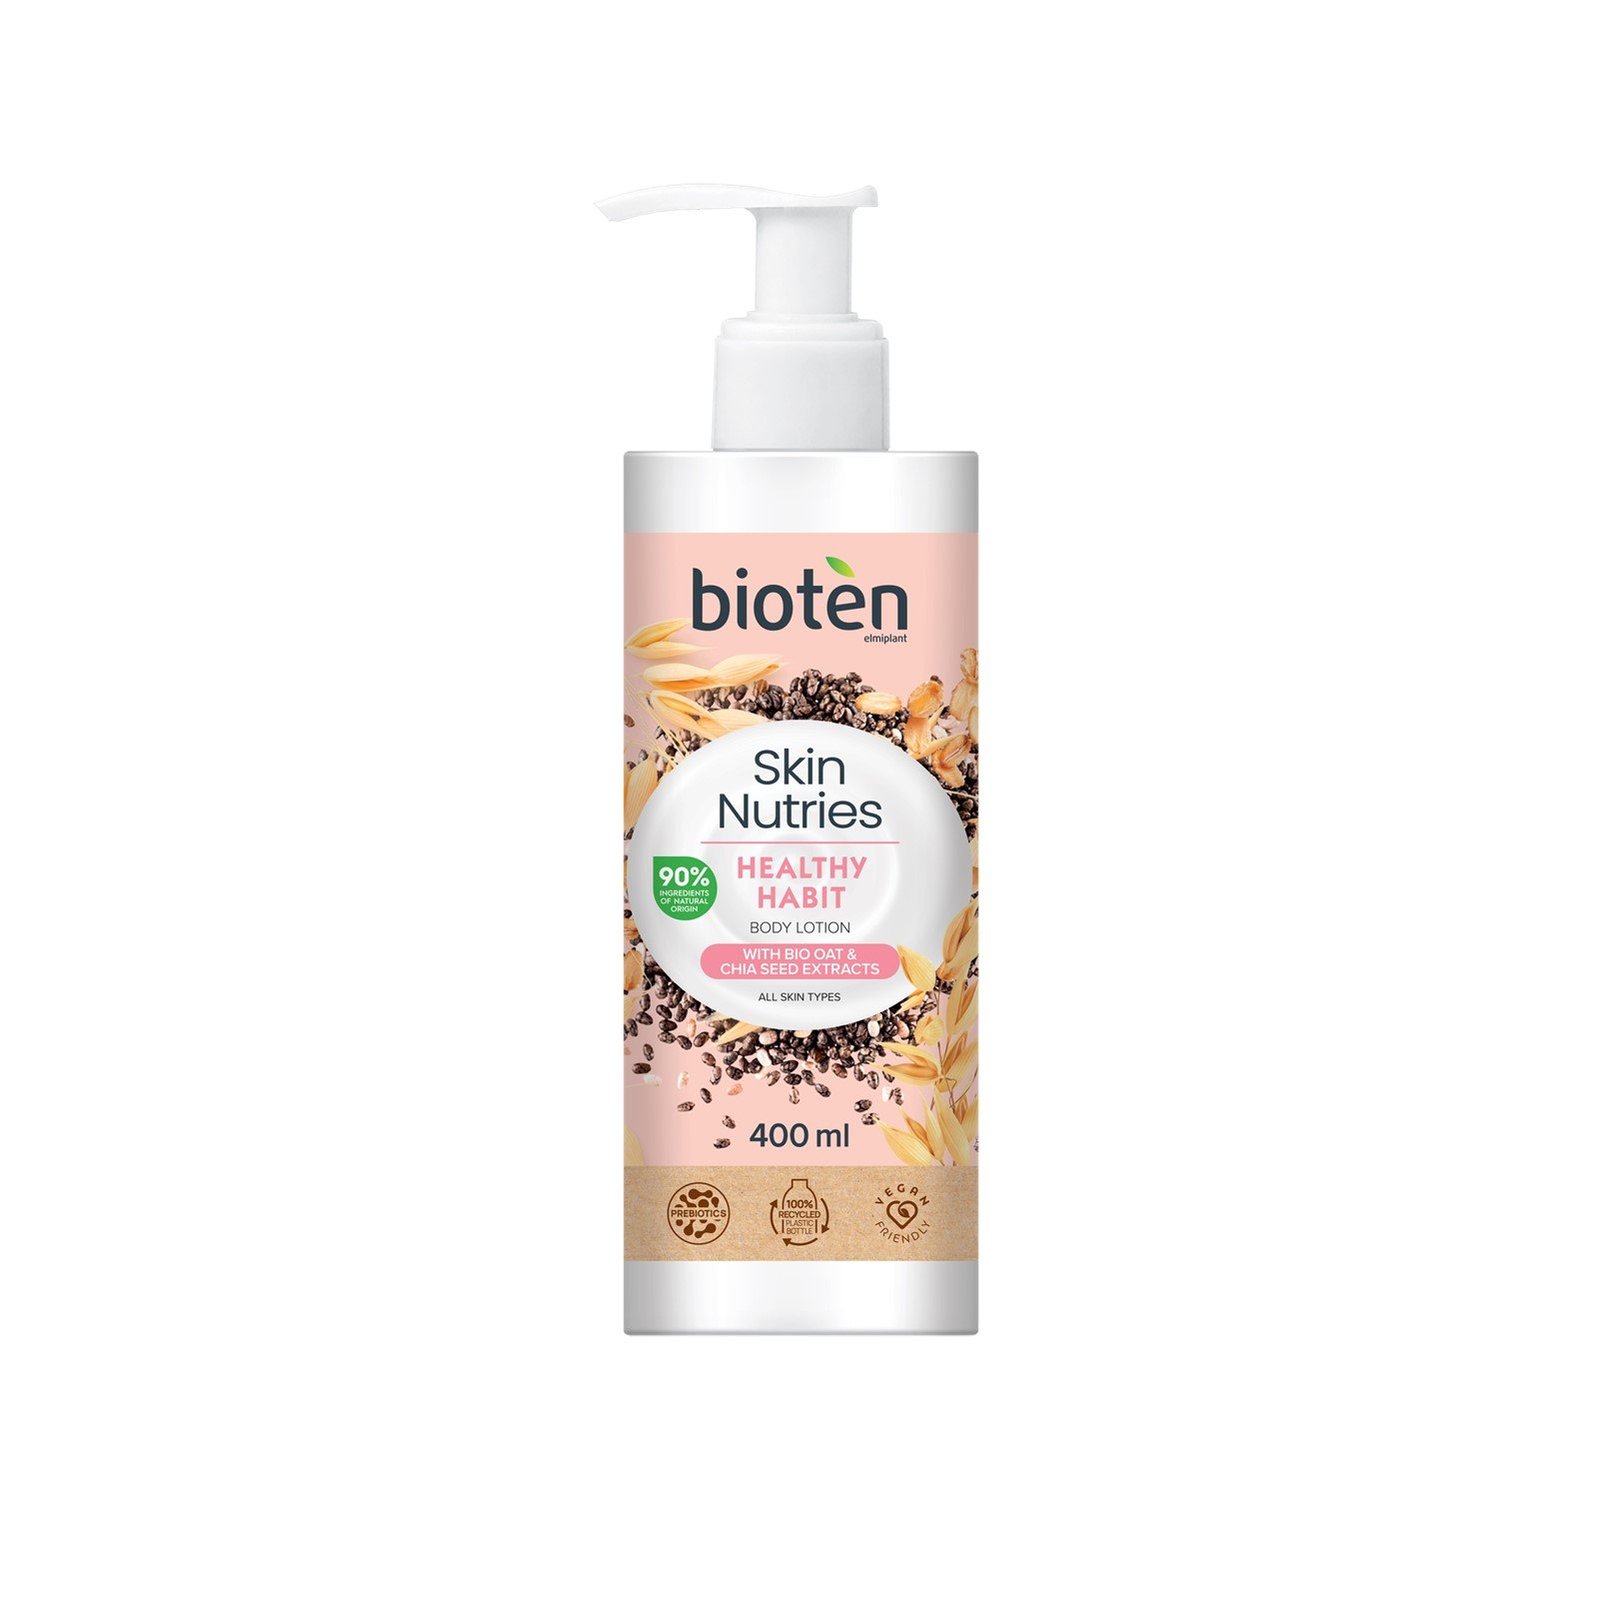 bioten Skin Nutries Healthy Habit Body Lotion 400ml